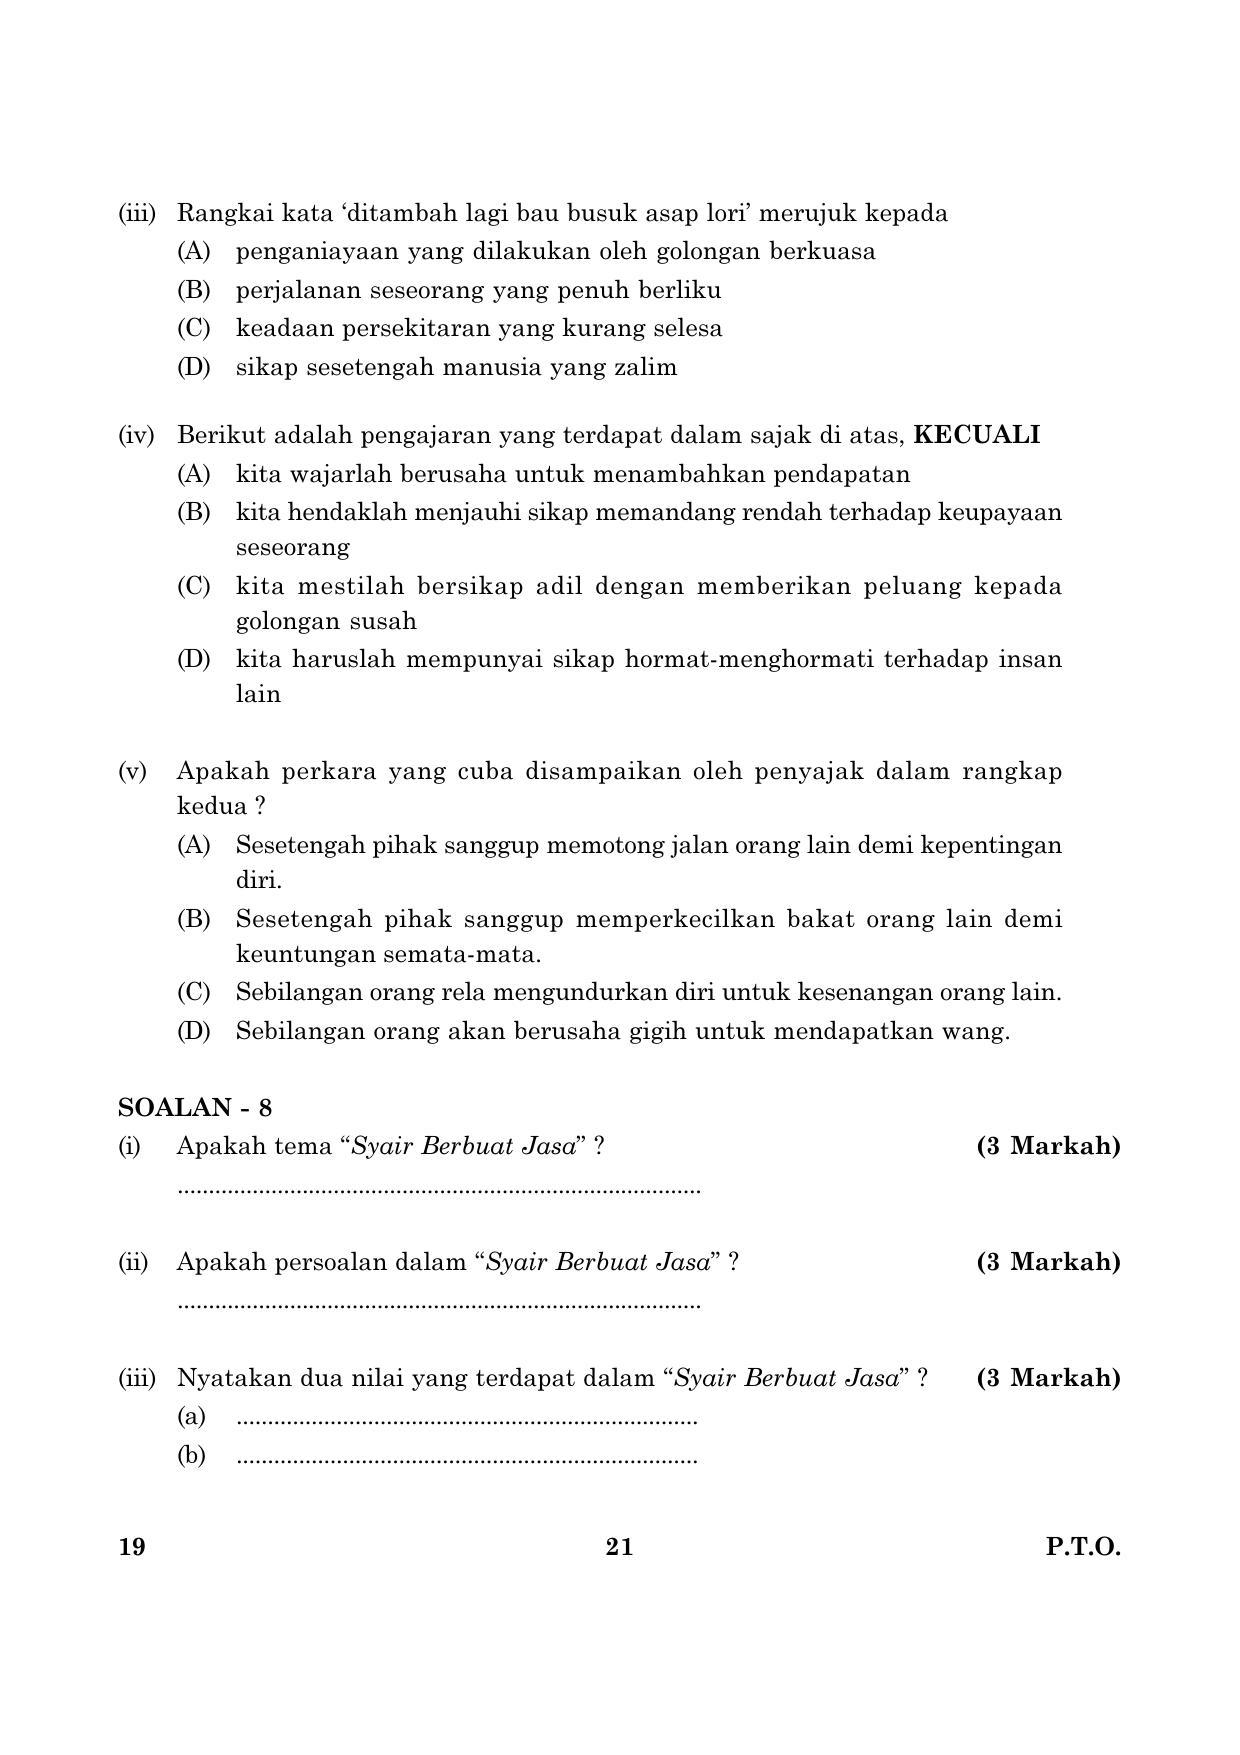 CBSE Class 10 019 Bahasamelayu English 2016 Question Paper - Page 21